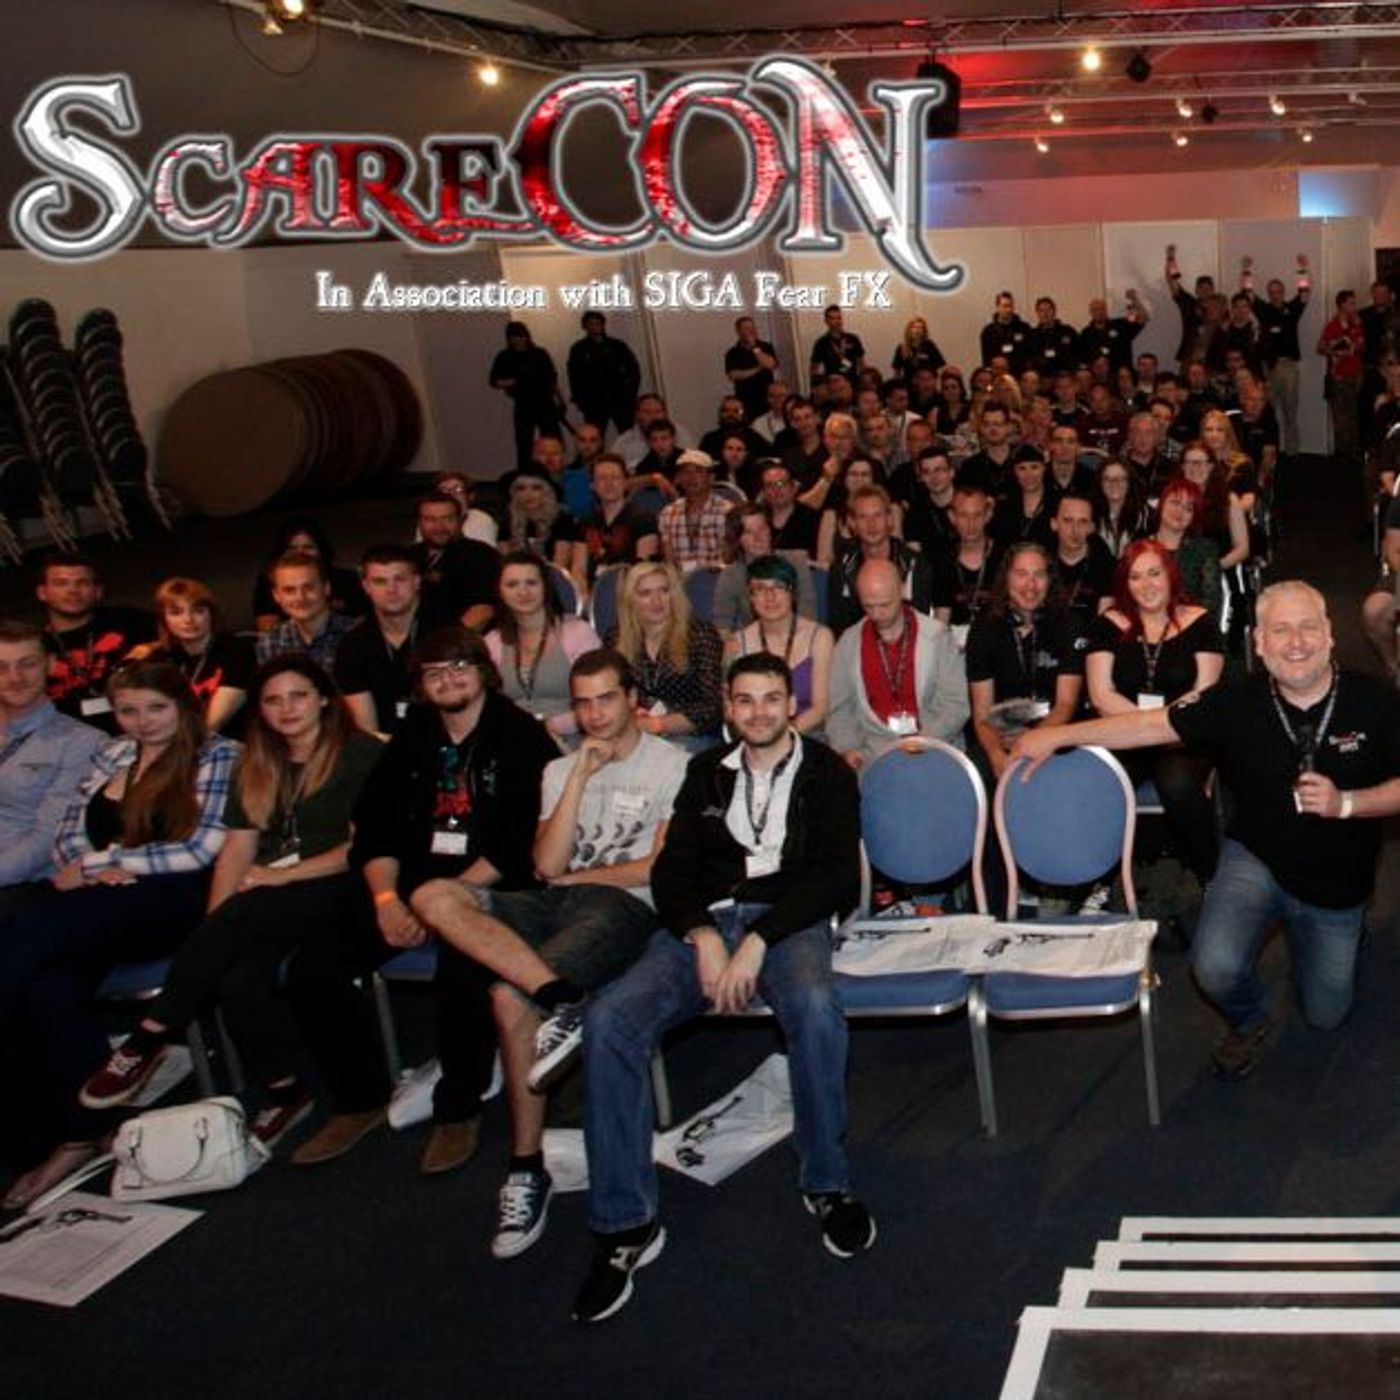 ScareCON 2016 Updates!